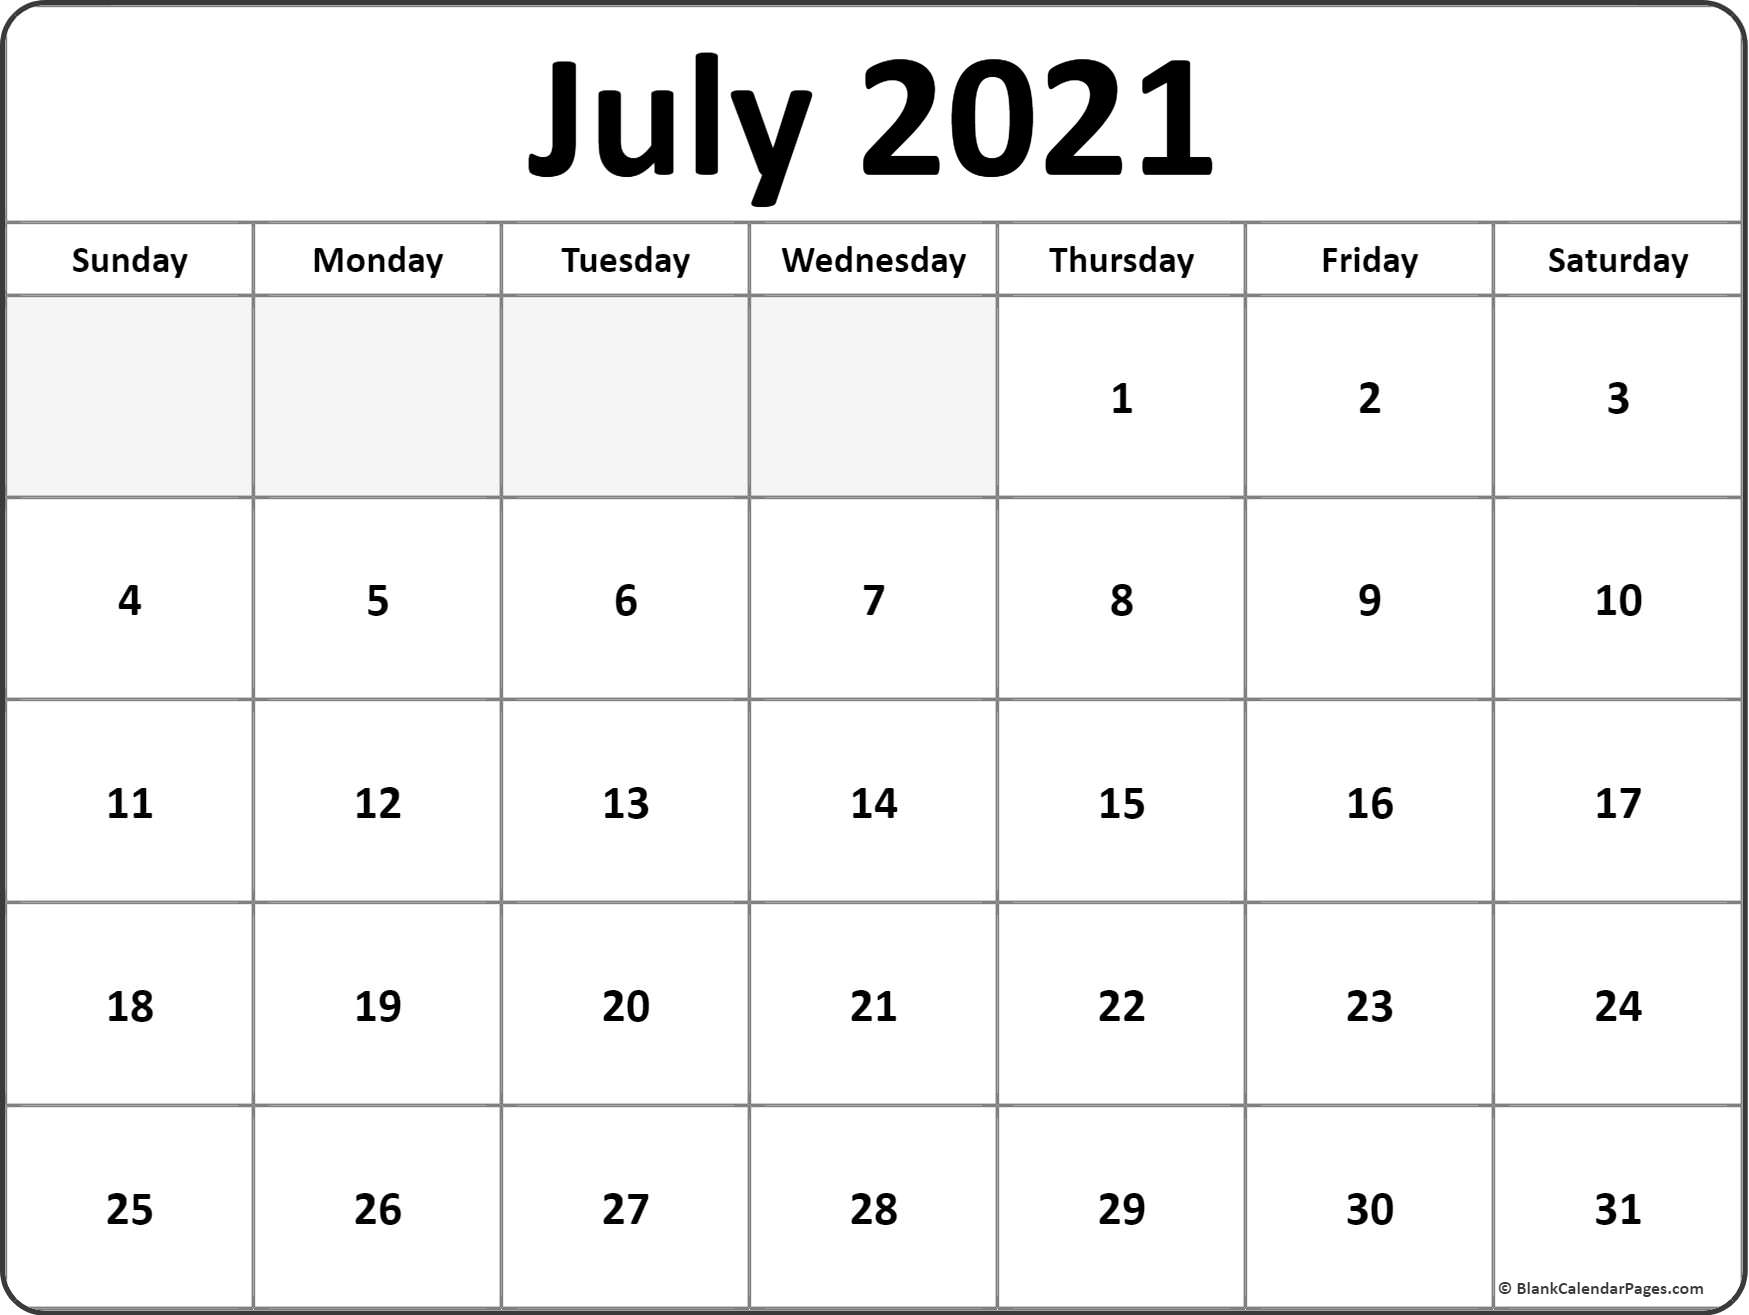 July 2021 Blank Calendar Templates 